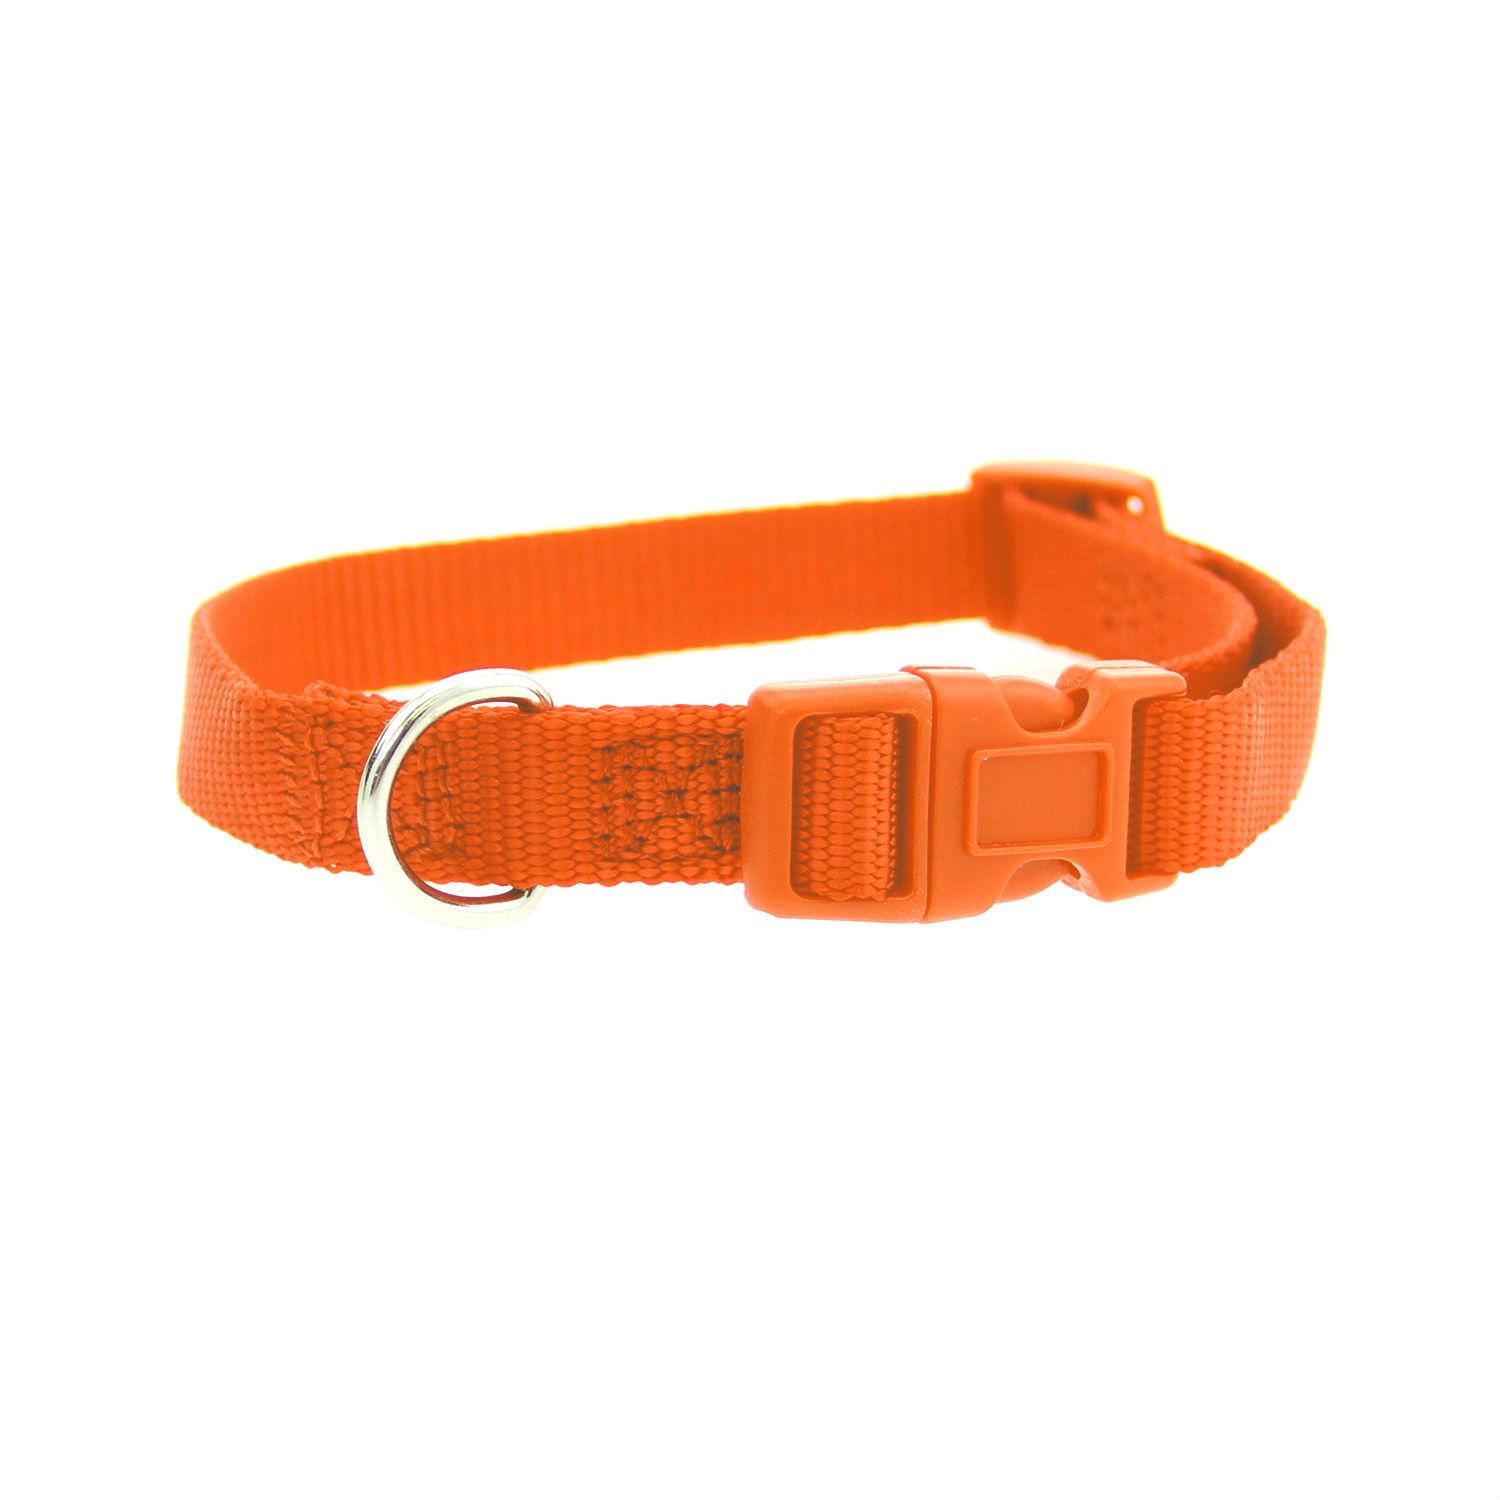 Casual Canine Nylon Dog Collar - Orange